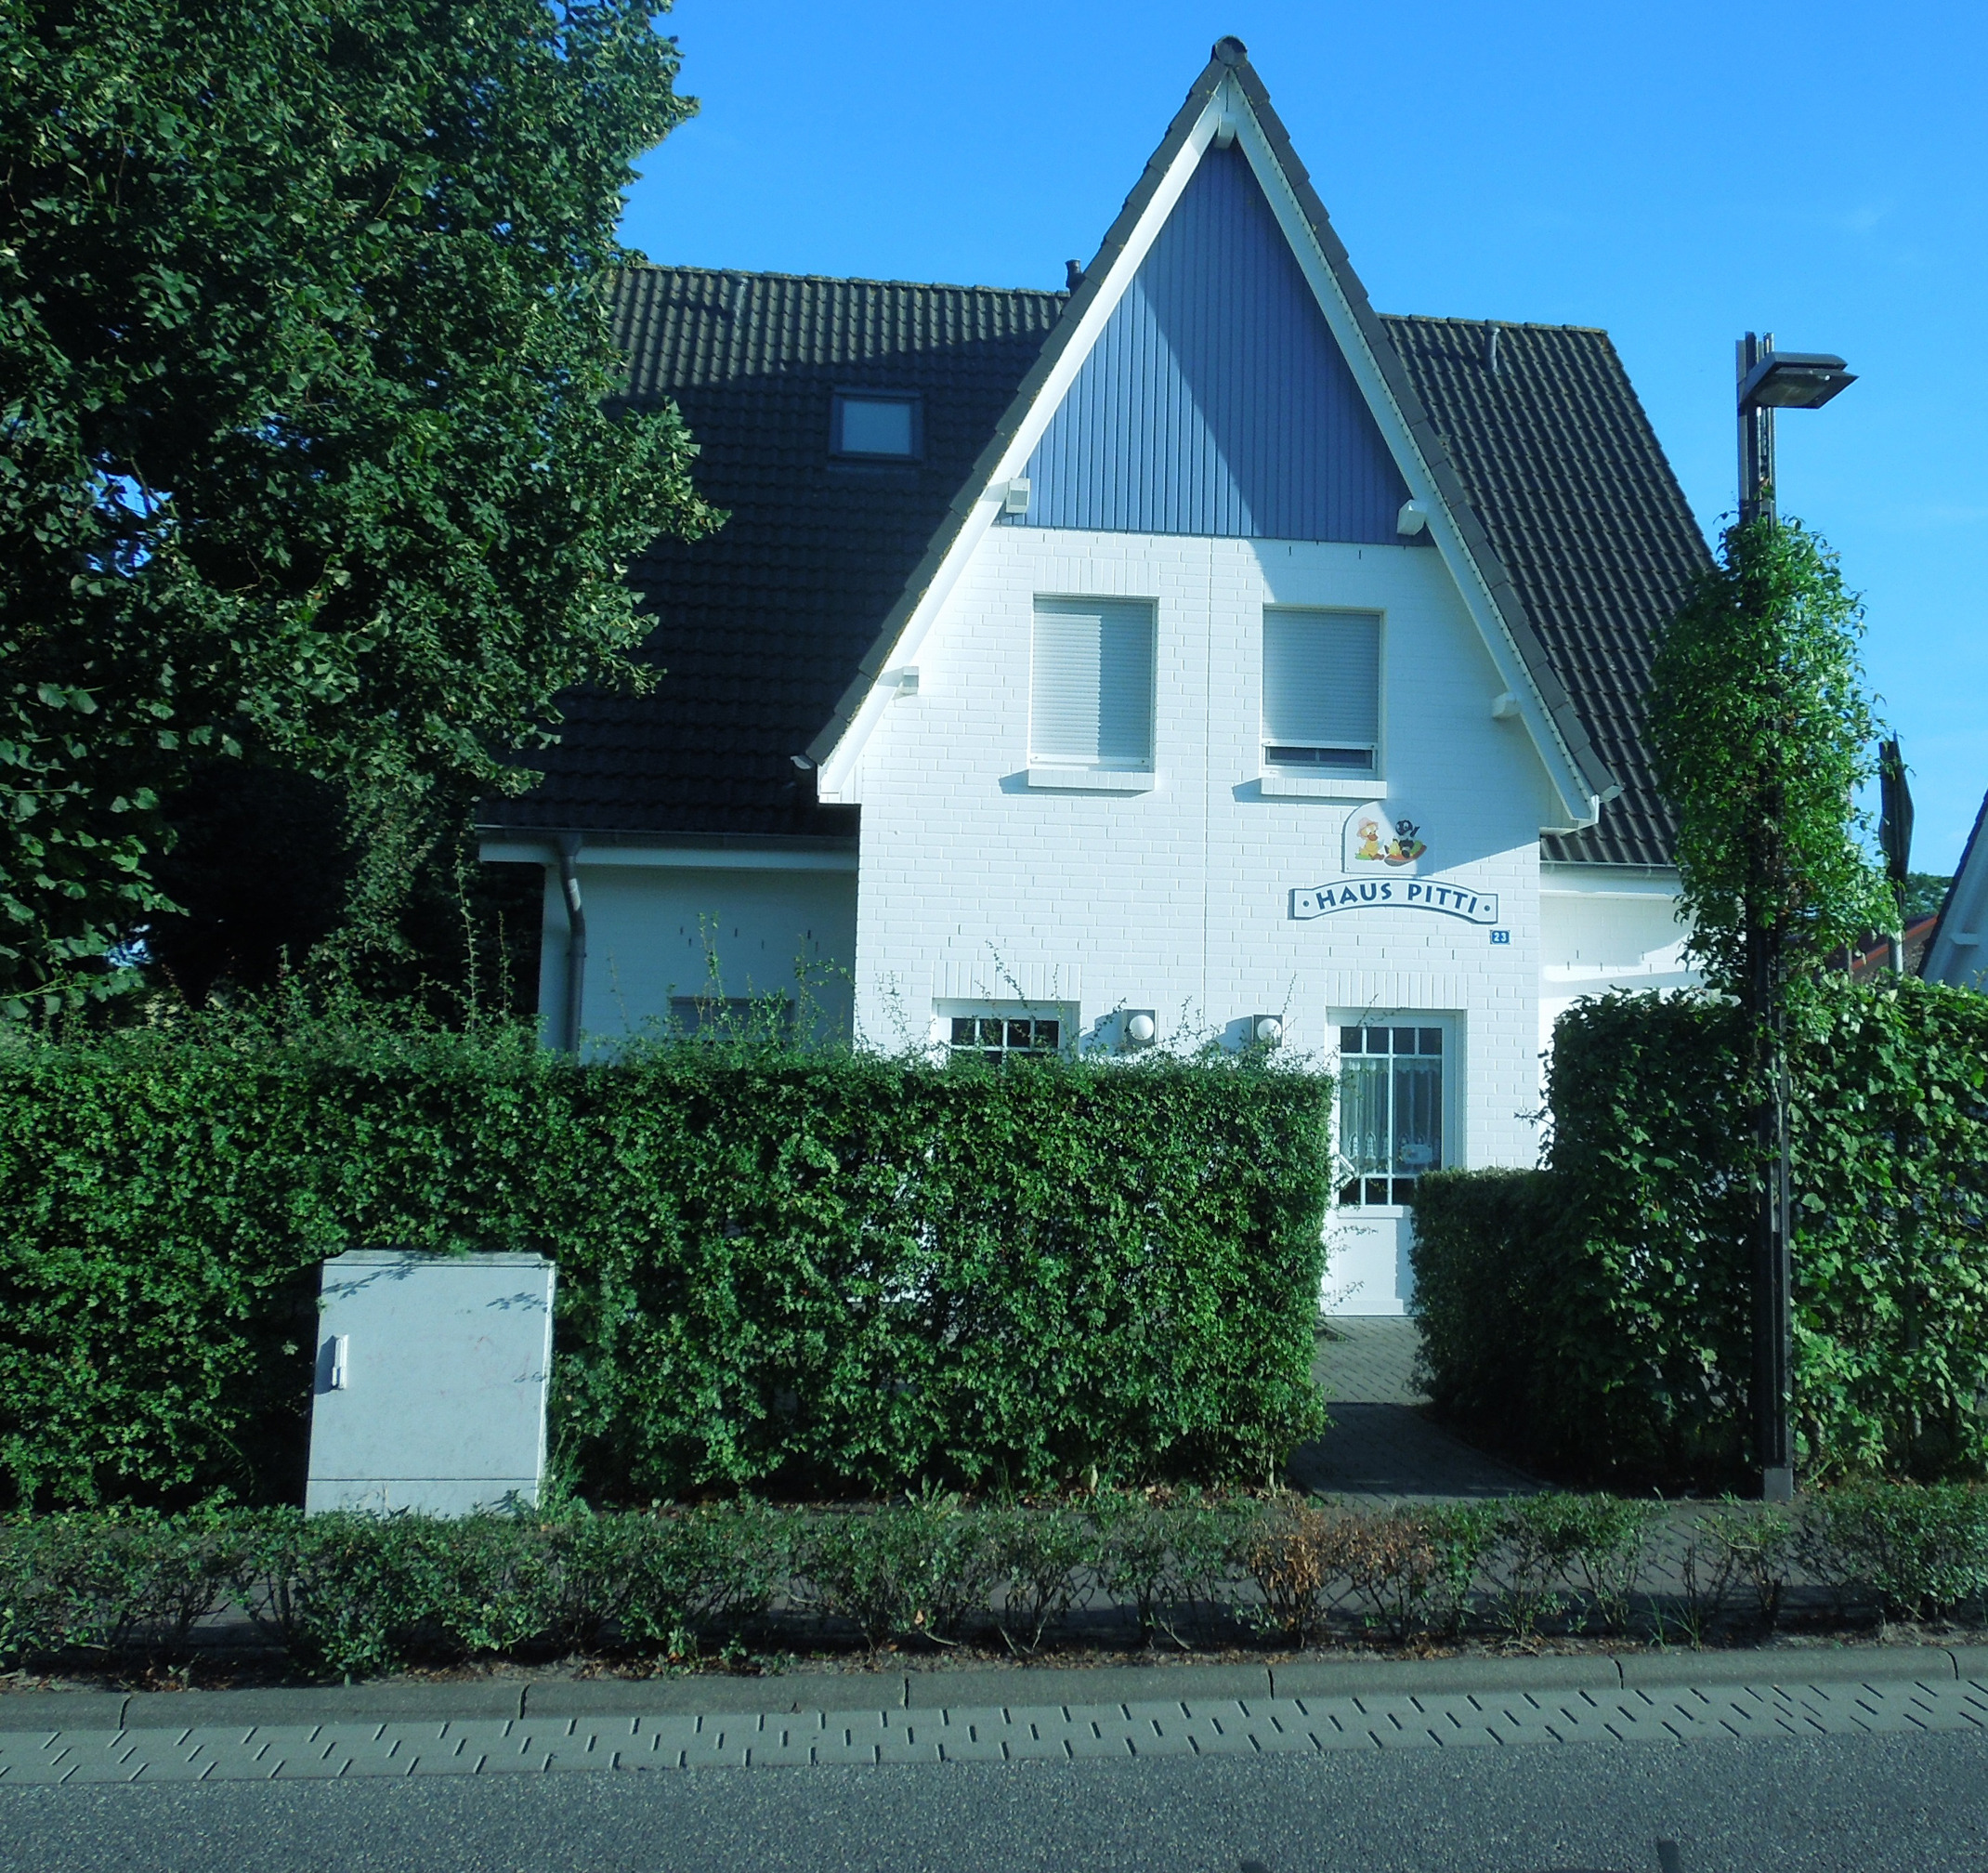 Pitti Ferienhaus in Zingst Ostseeheilbad